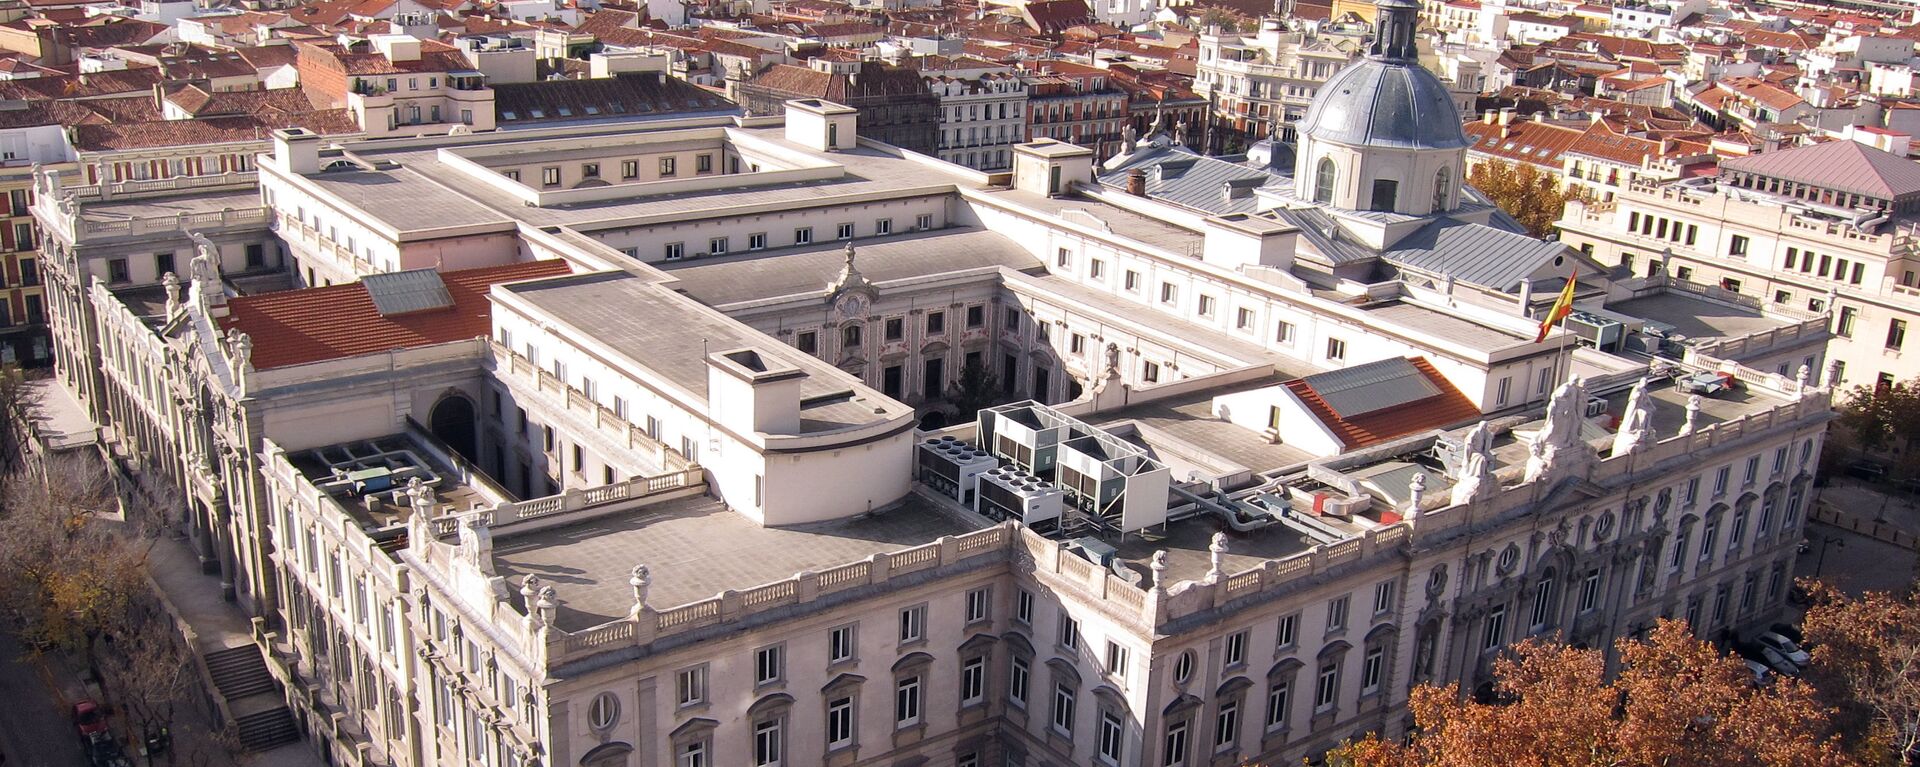 Tribunal Supremo de España en Madrid (vista aérea) - Sputnik Mundo, 1920, 30.09.2021